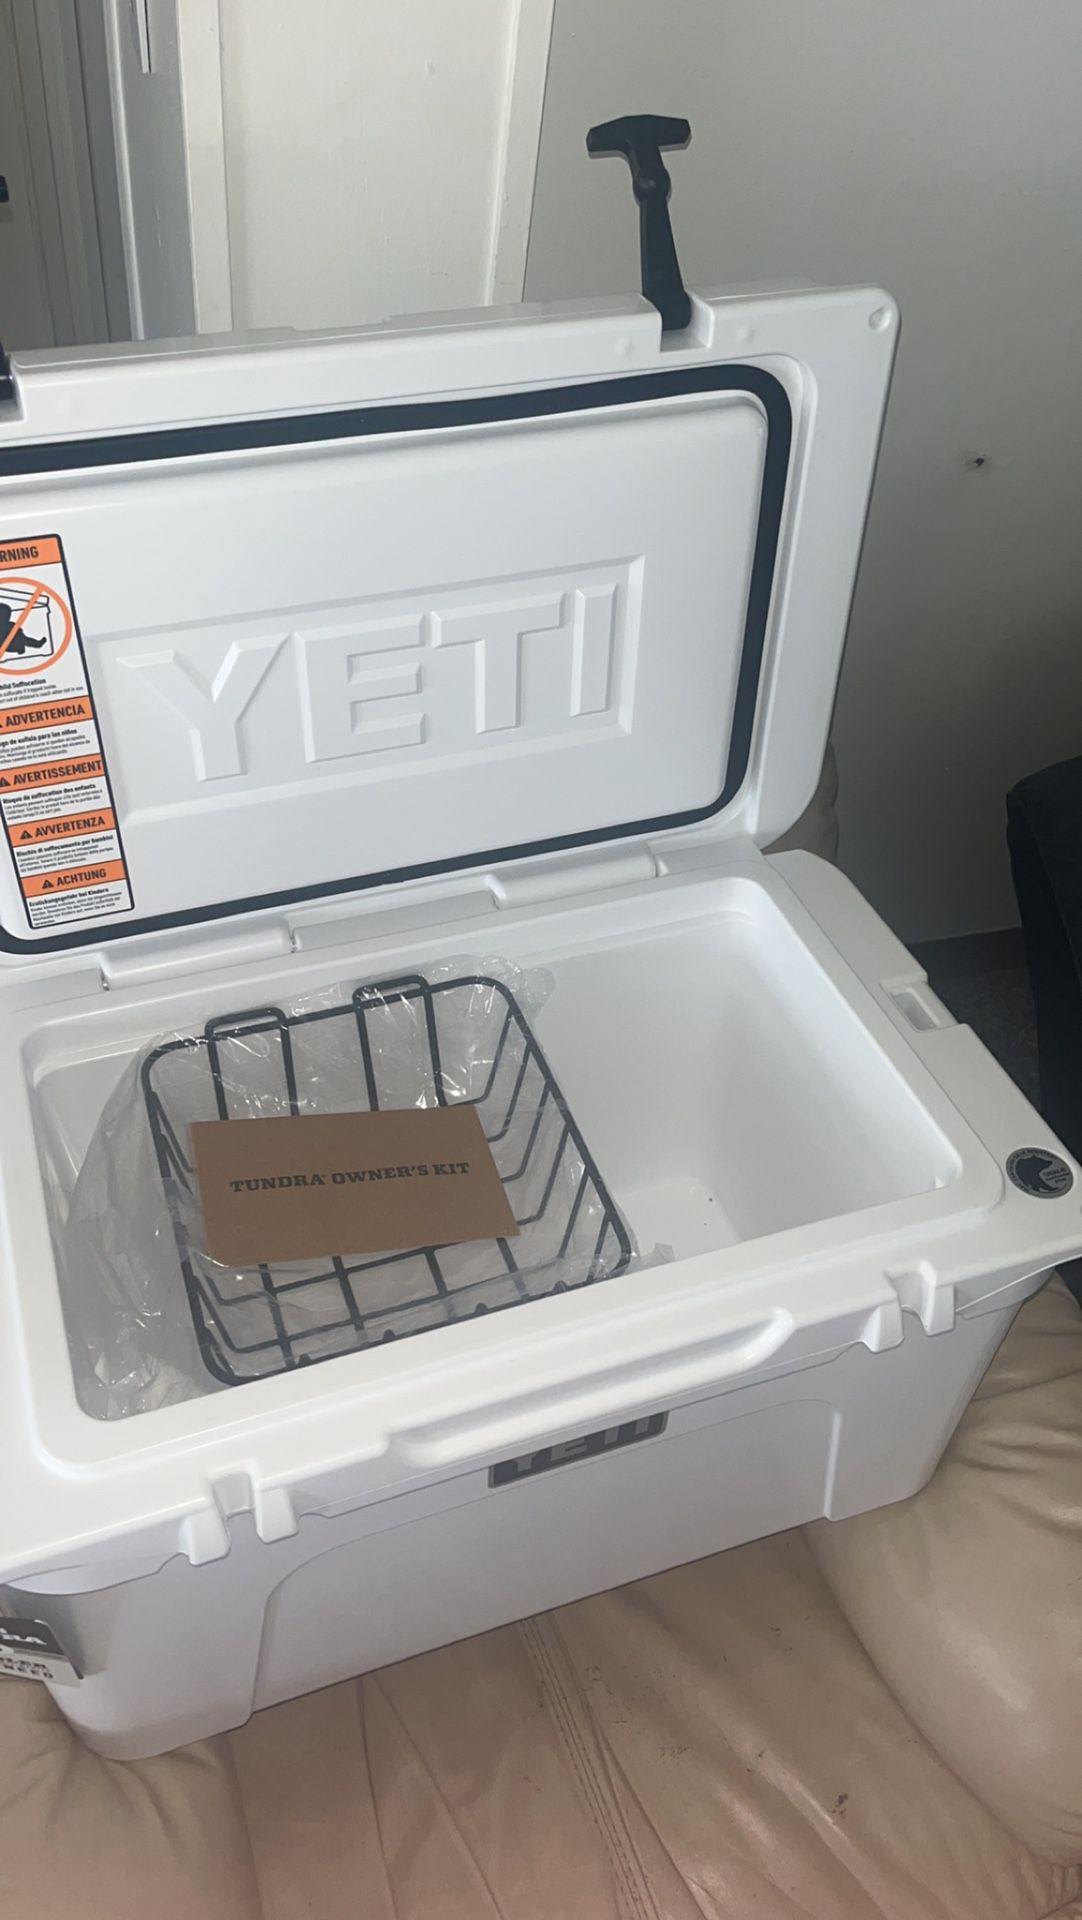 Zyn Branded Yeti Cooler